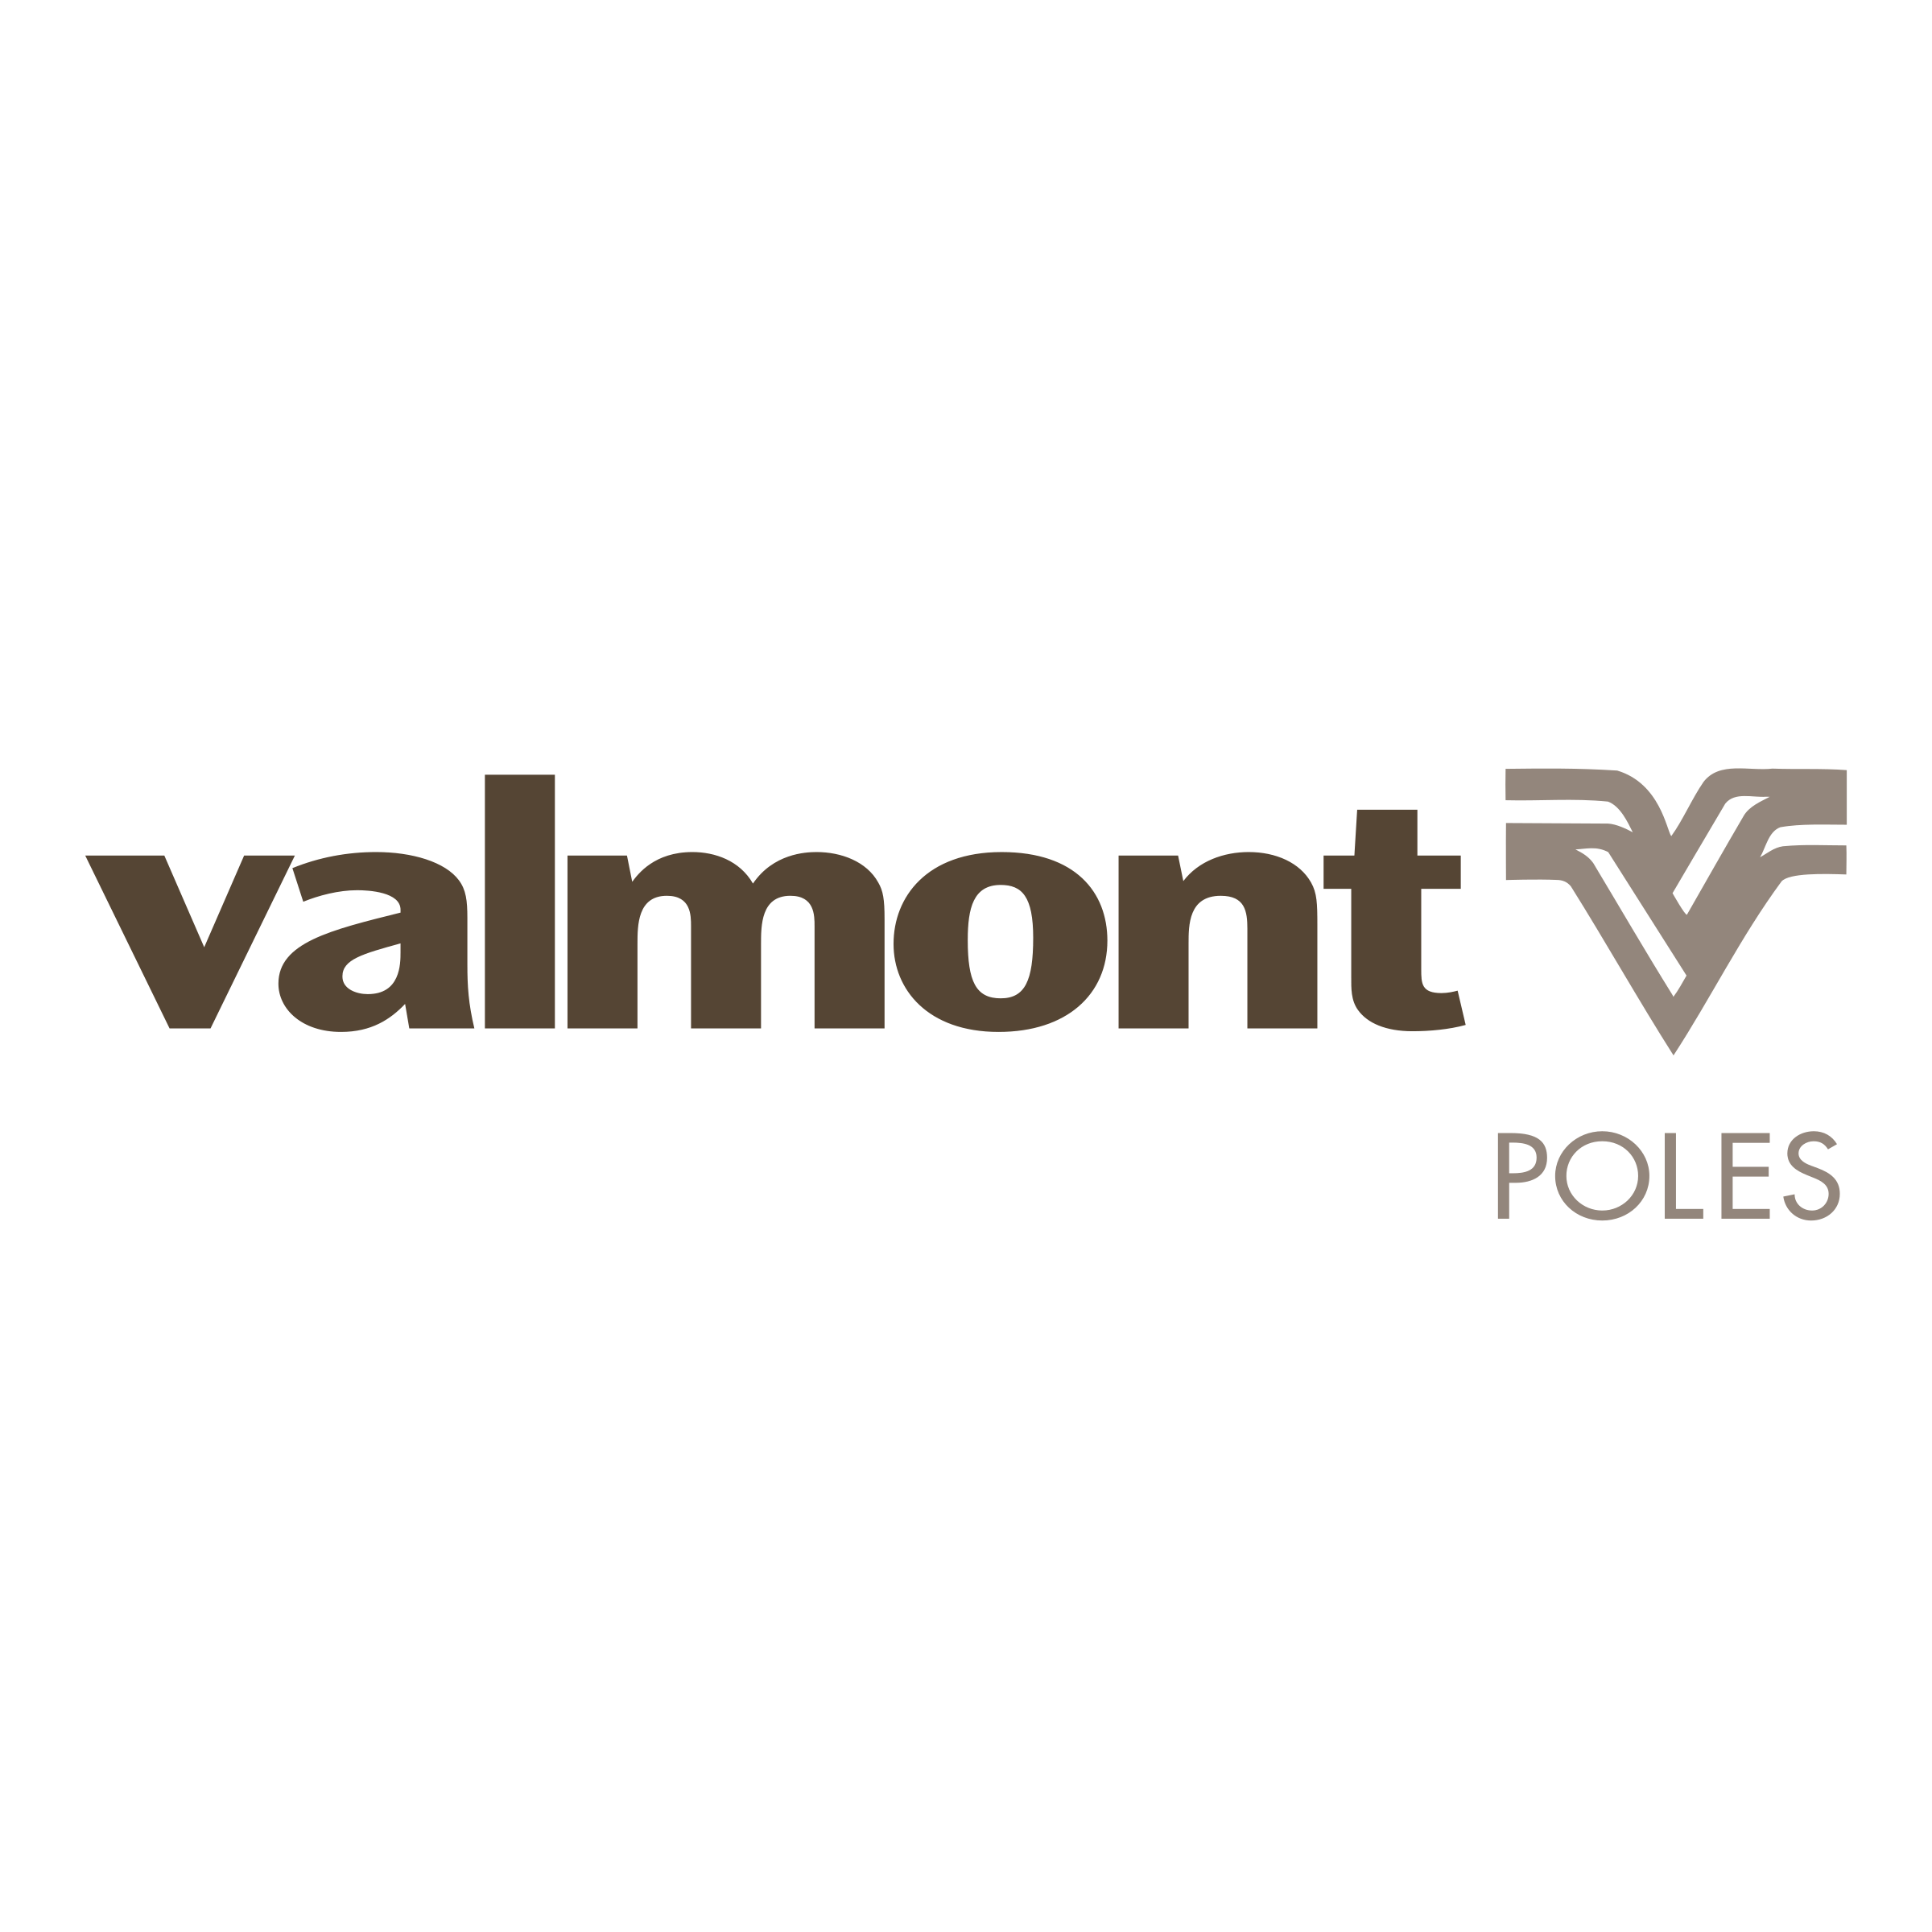 Valmont Logo - Valmont Logo PNG Transparent & SVG Vector - Freebie Supply